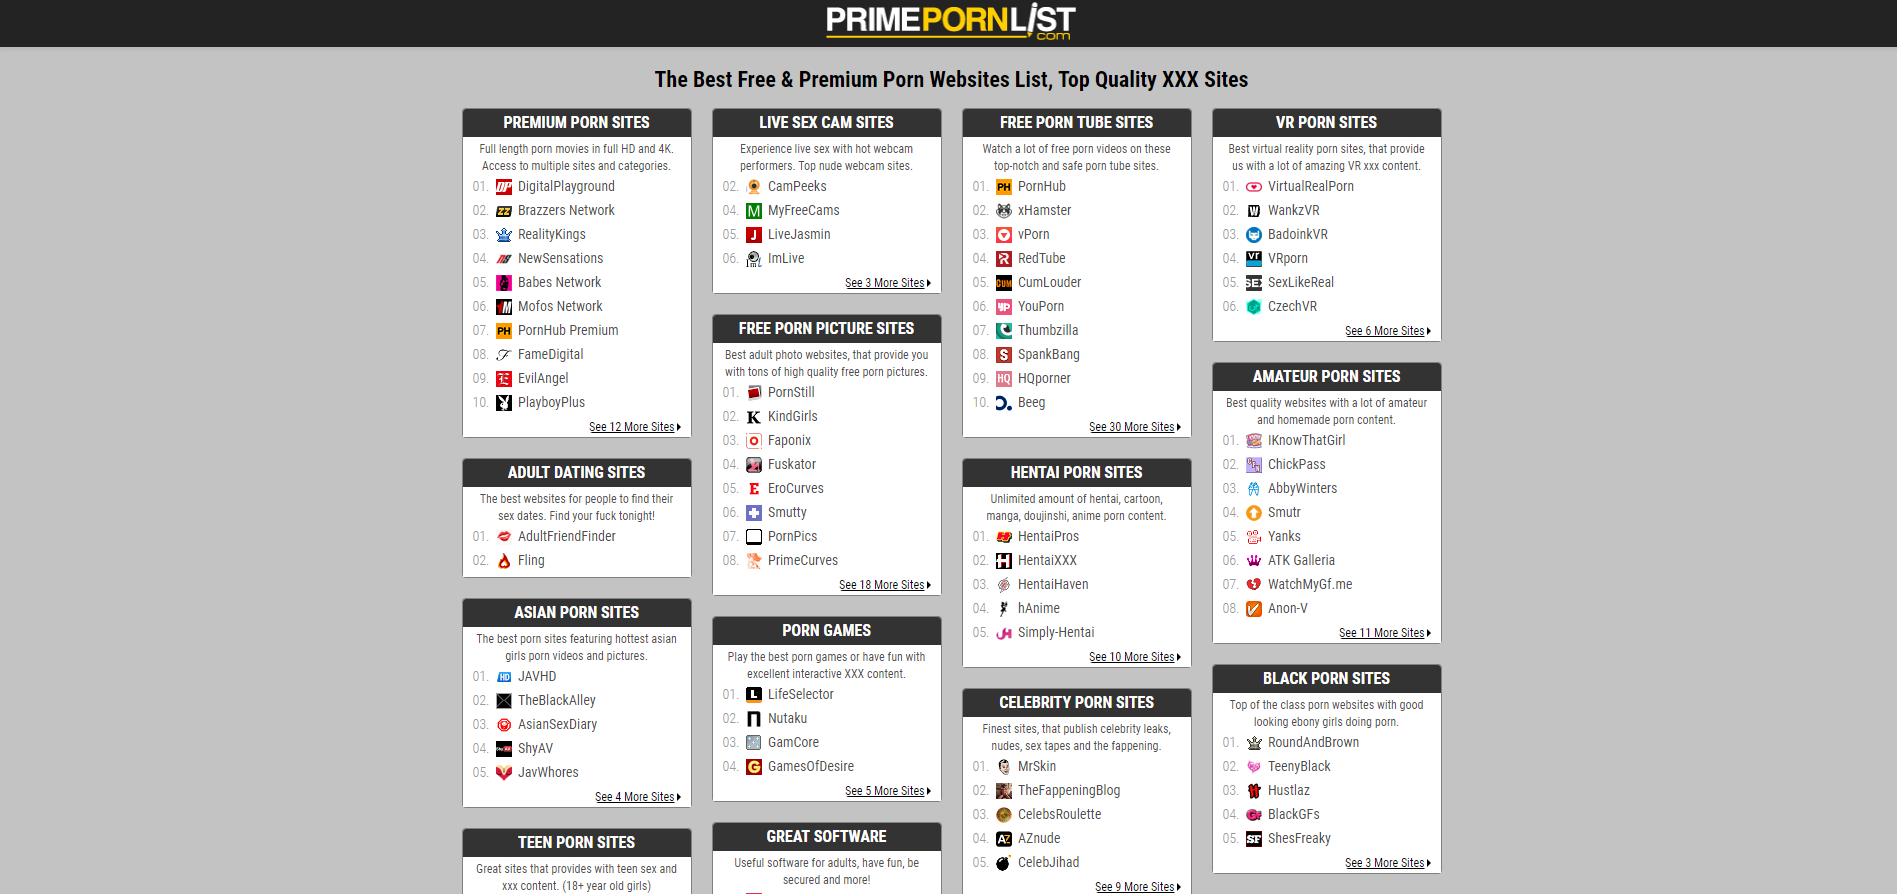 Prime Porn List â€“ Your Hottest Resource for Top Porn Information